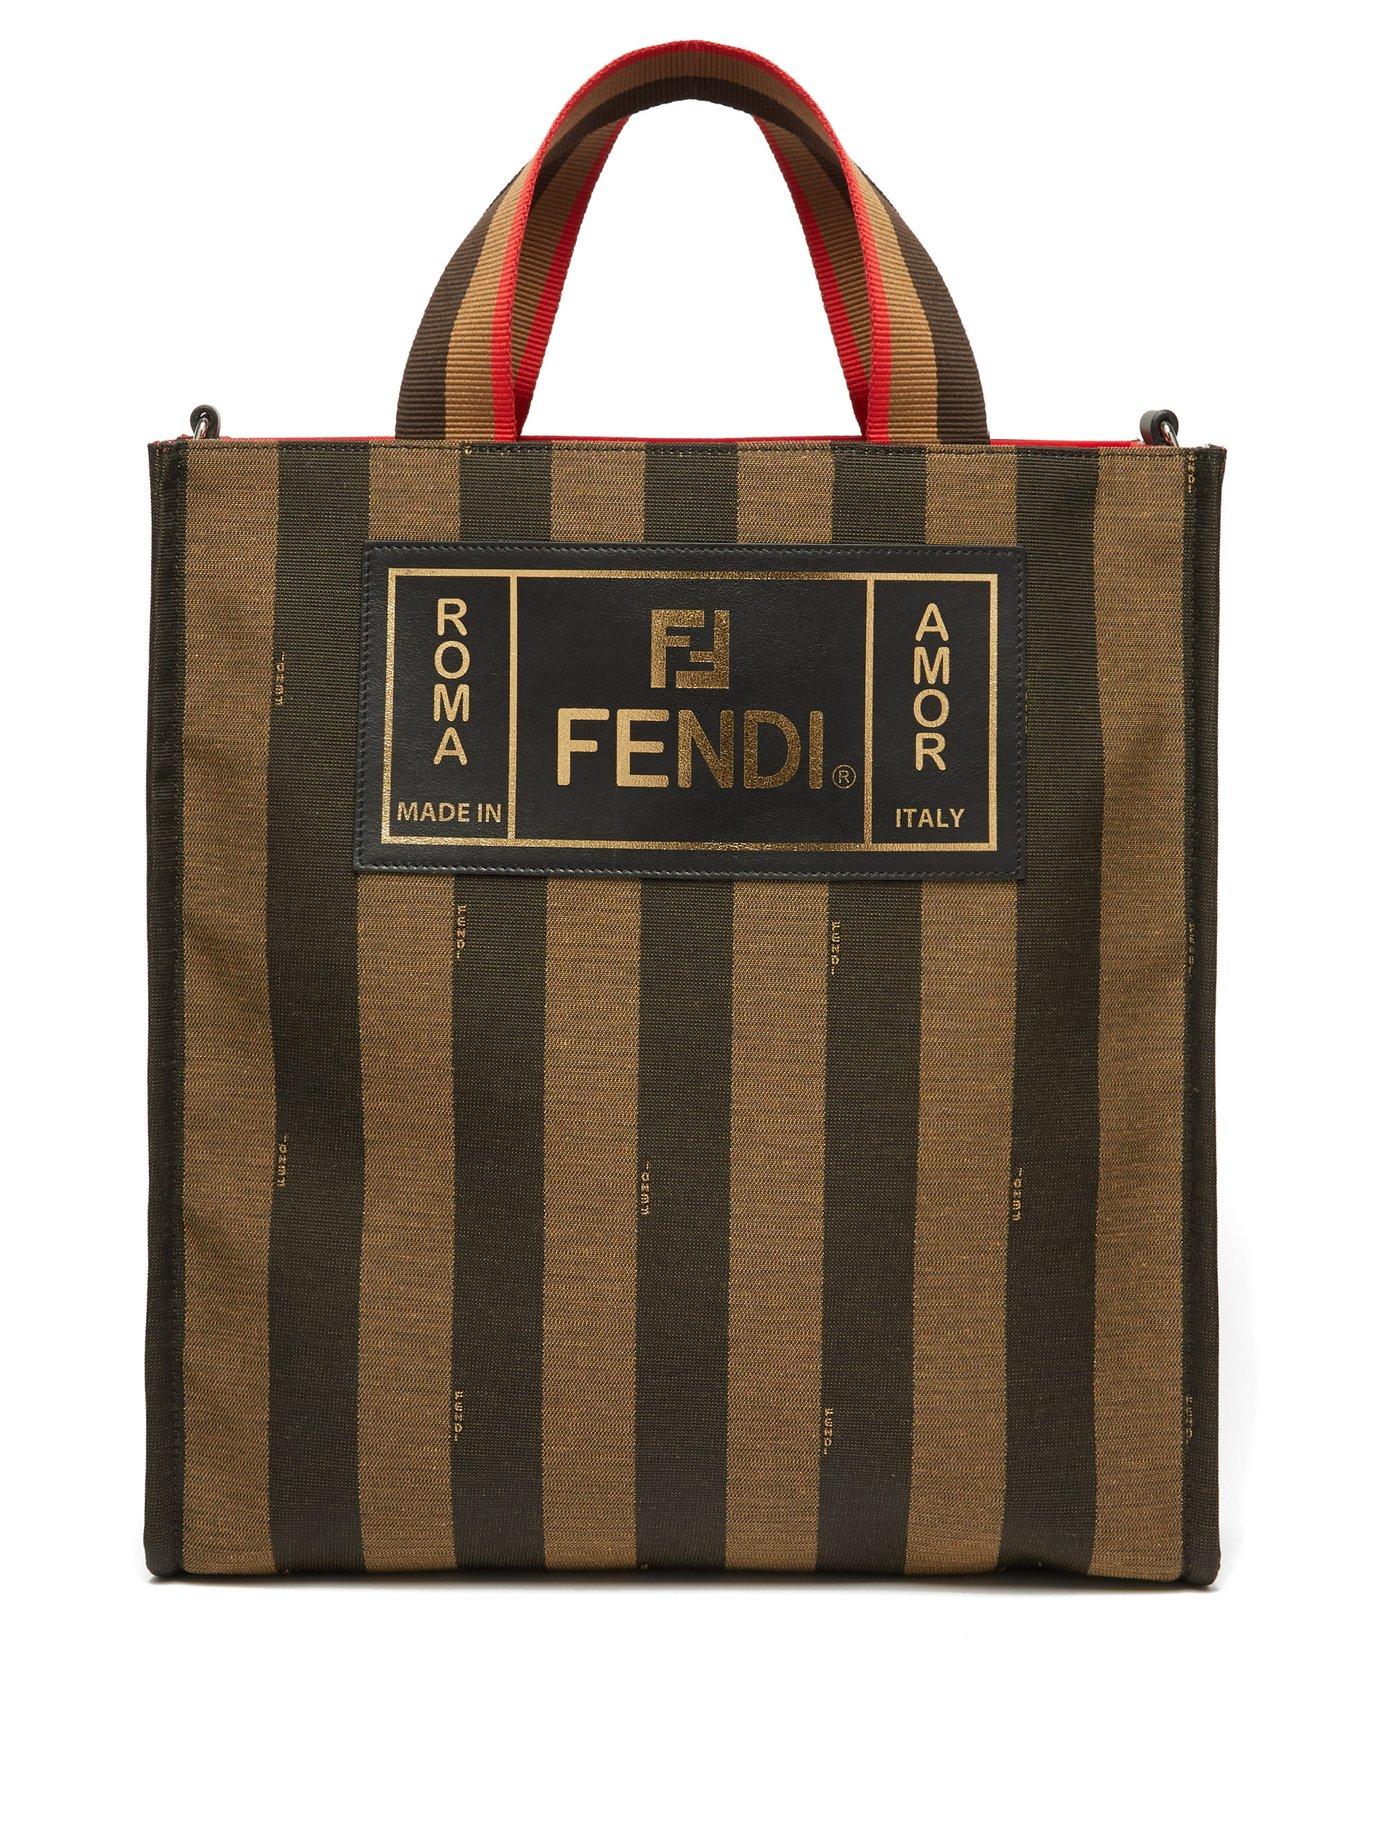 Fendi Cotton Striped Tote Bag in Brown for Men - Lyst